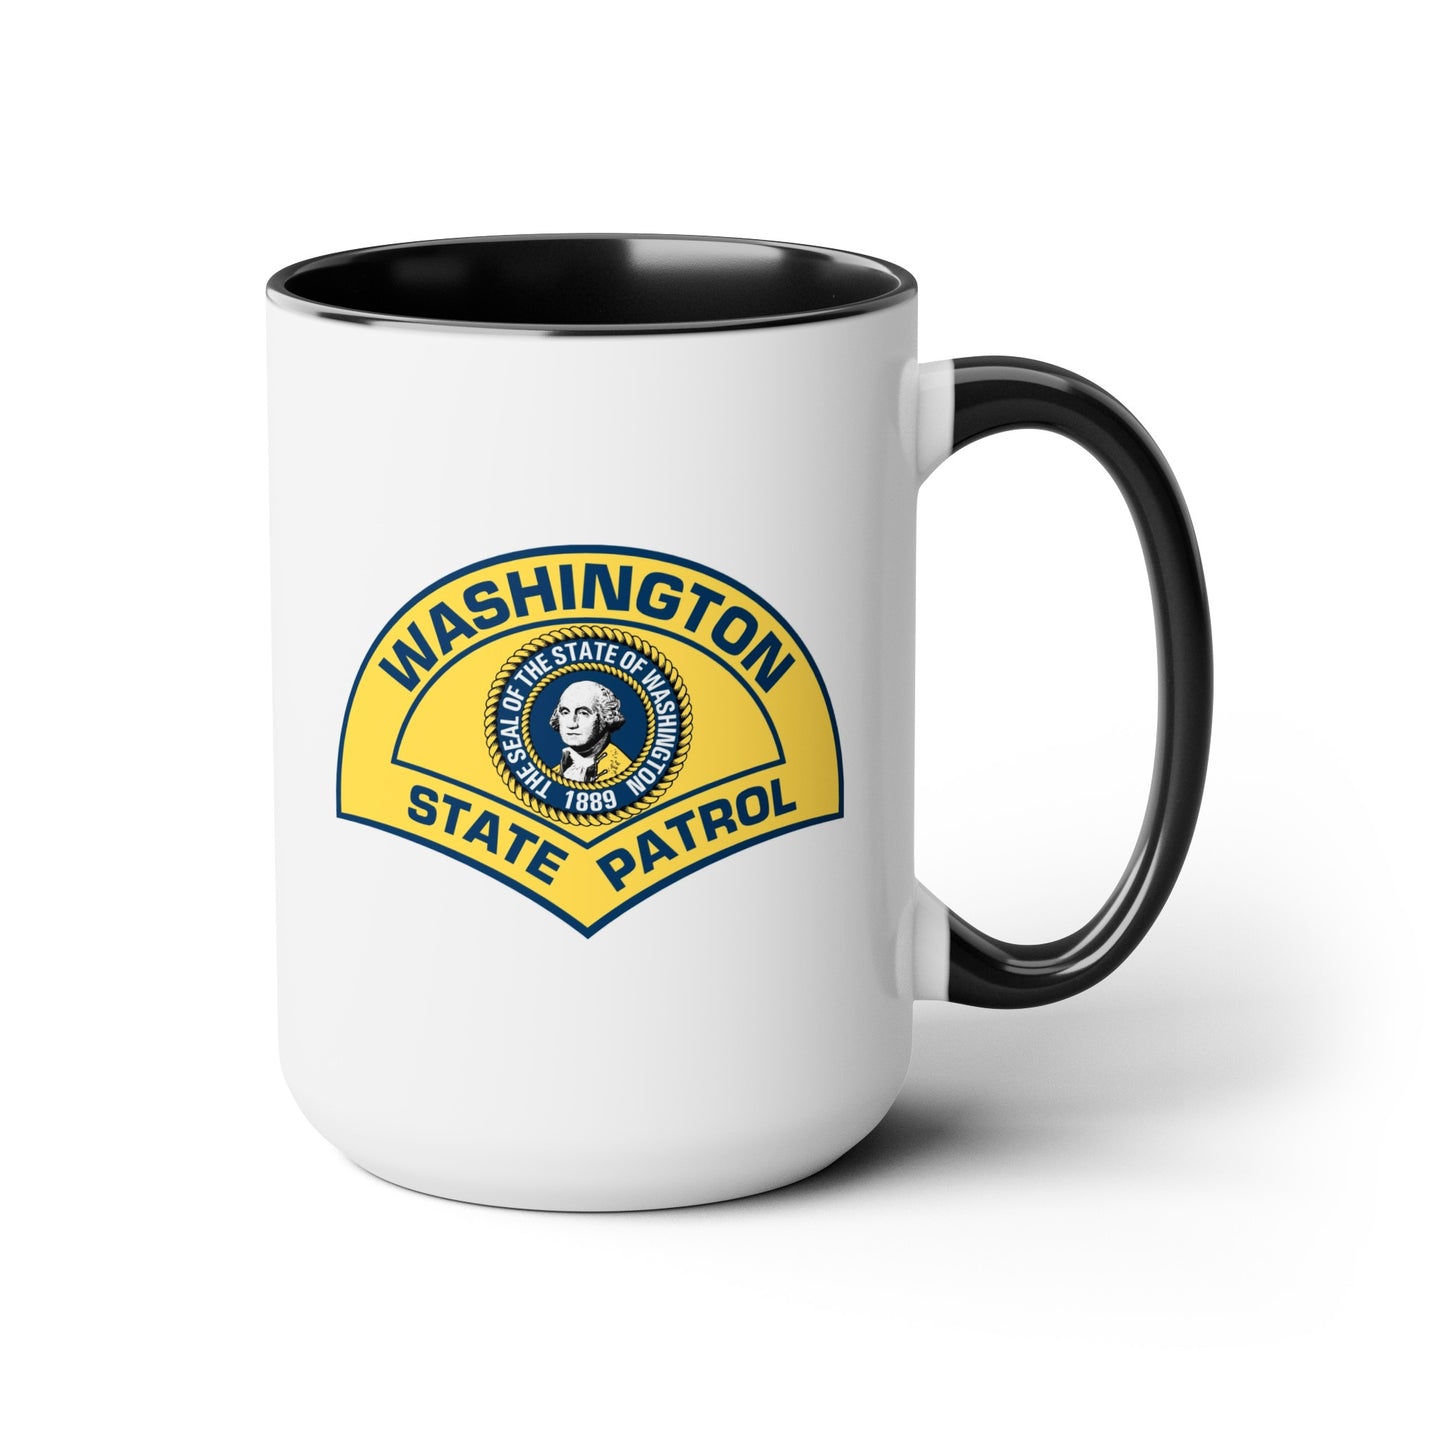 Washington State Patrol Coffee Mug - Double Sided Black Accent White Ceramic 15oz by TheGlassyLass.com